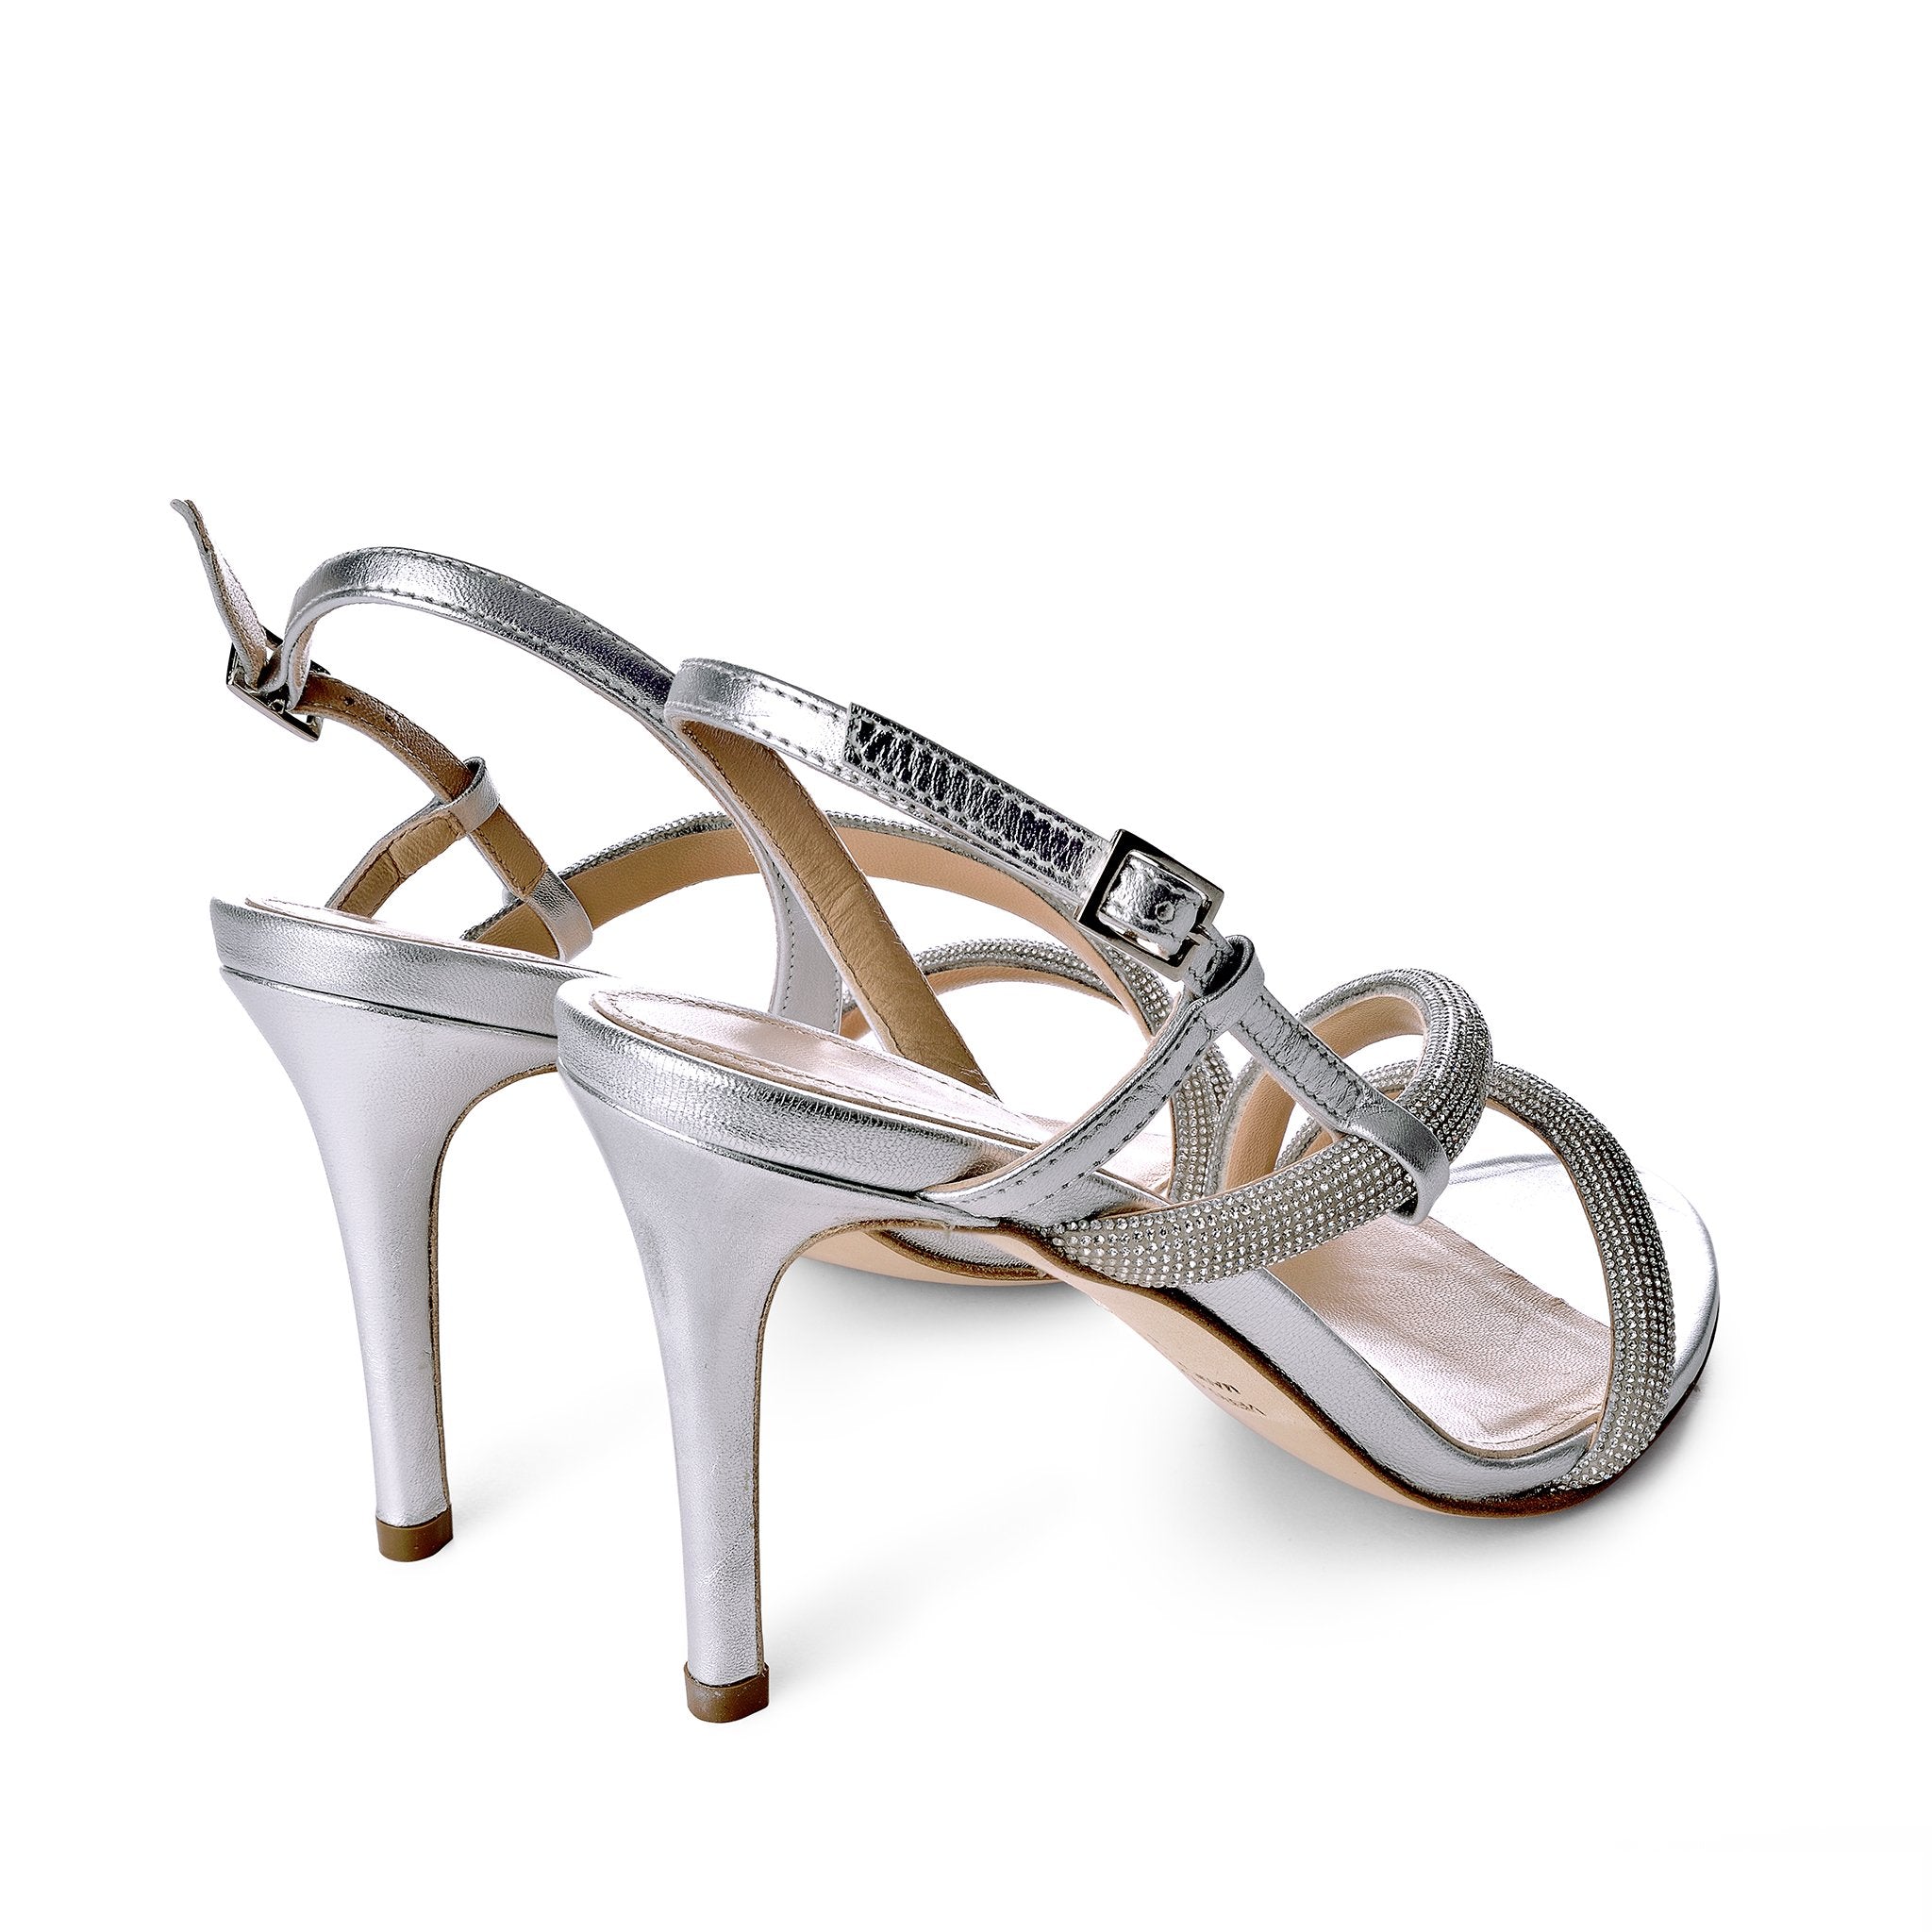 Jolanda Strass Silver High Sandals 1440 - 7